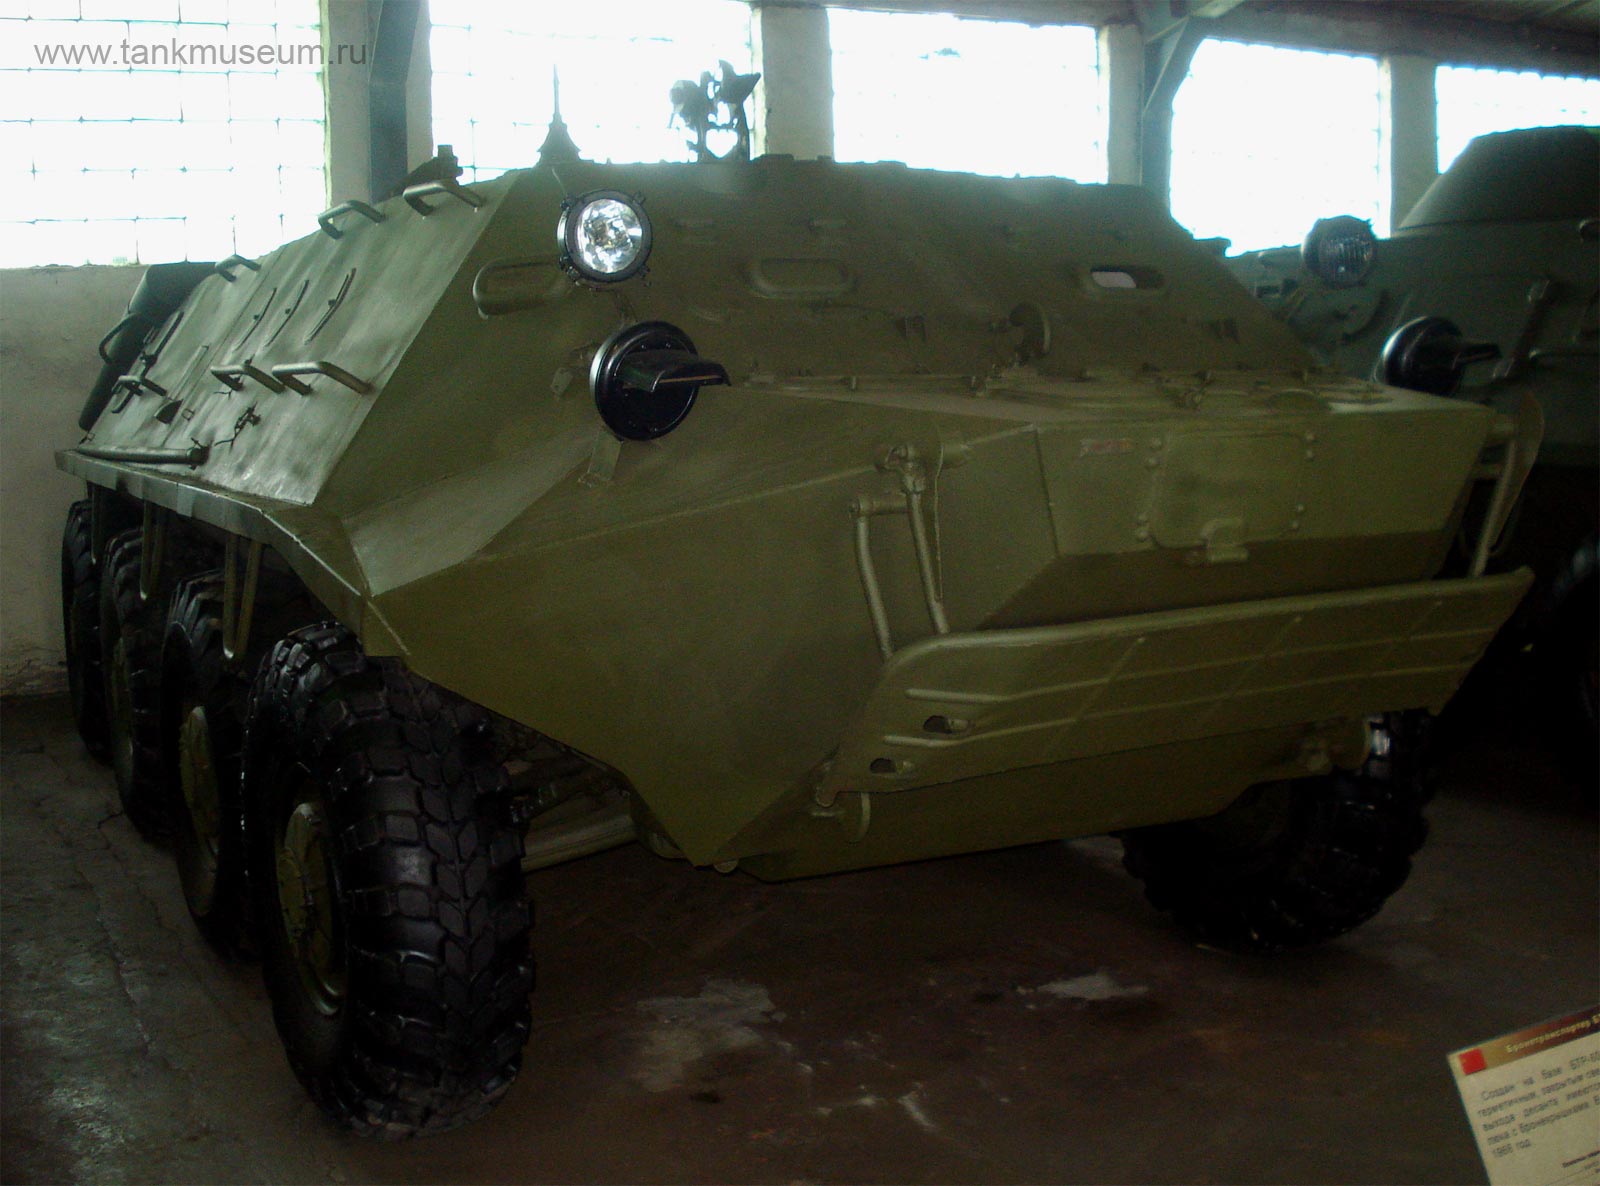 Kubinka tank museum Armored personnel carrier BTR-60PA